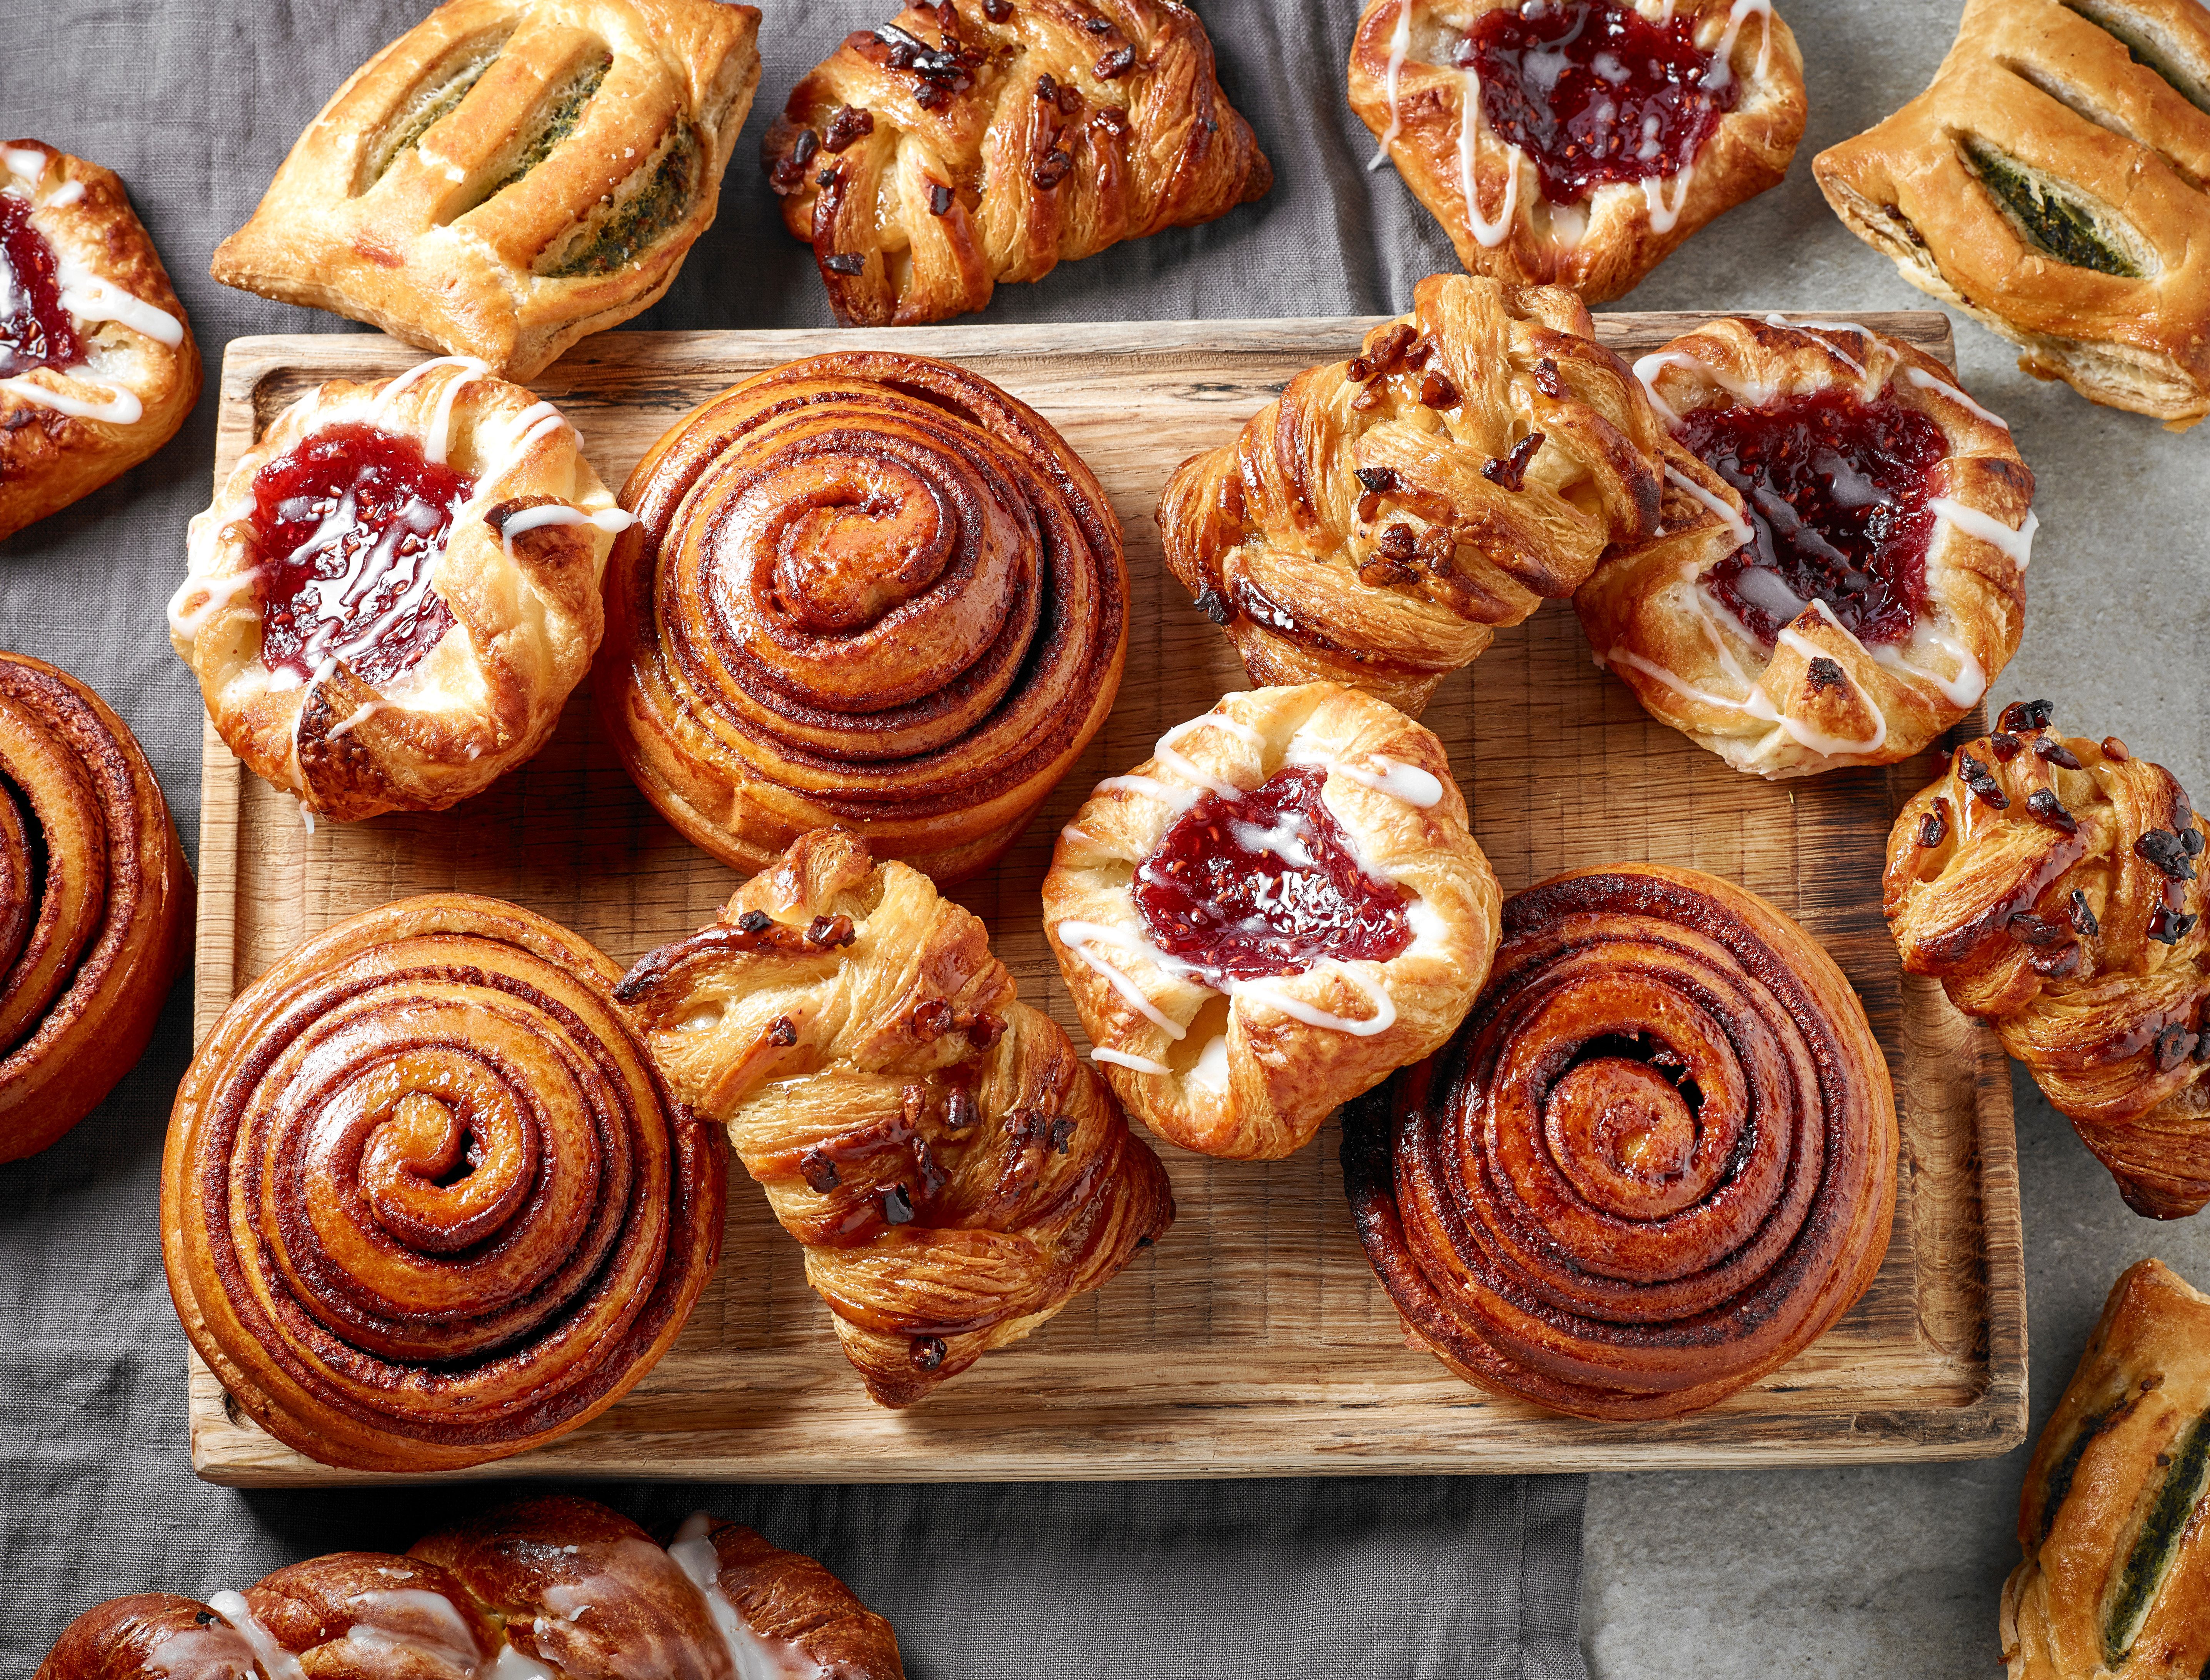 R&D Insights: Formulating for Better Tasting Baked Goods